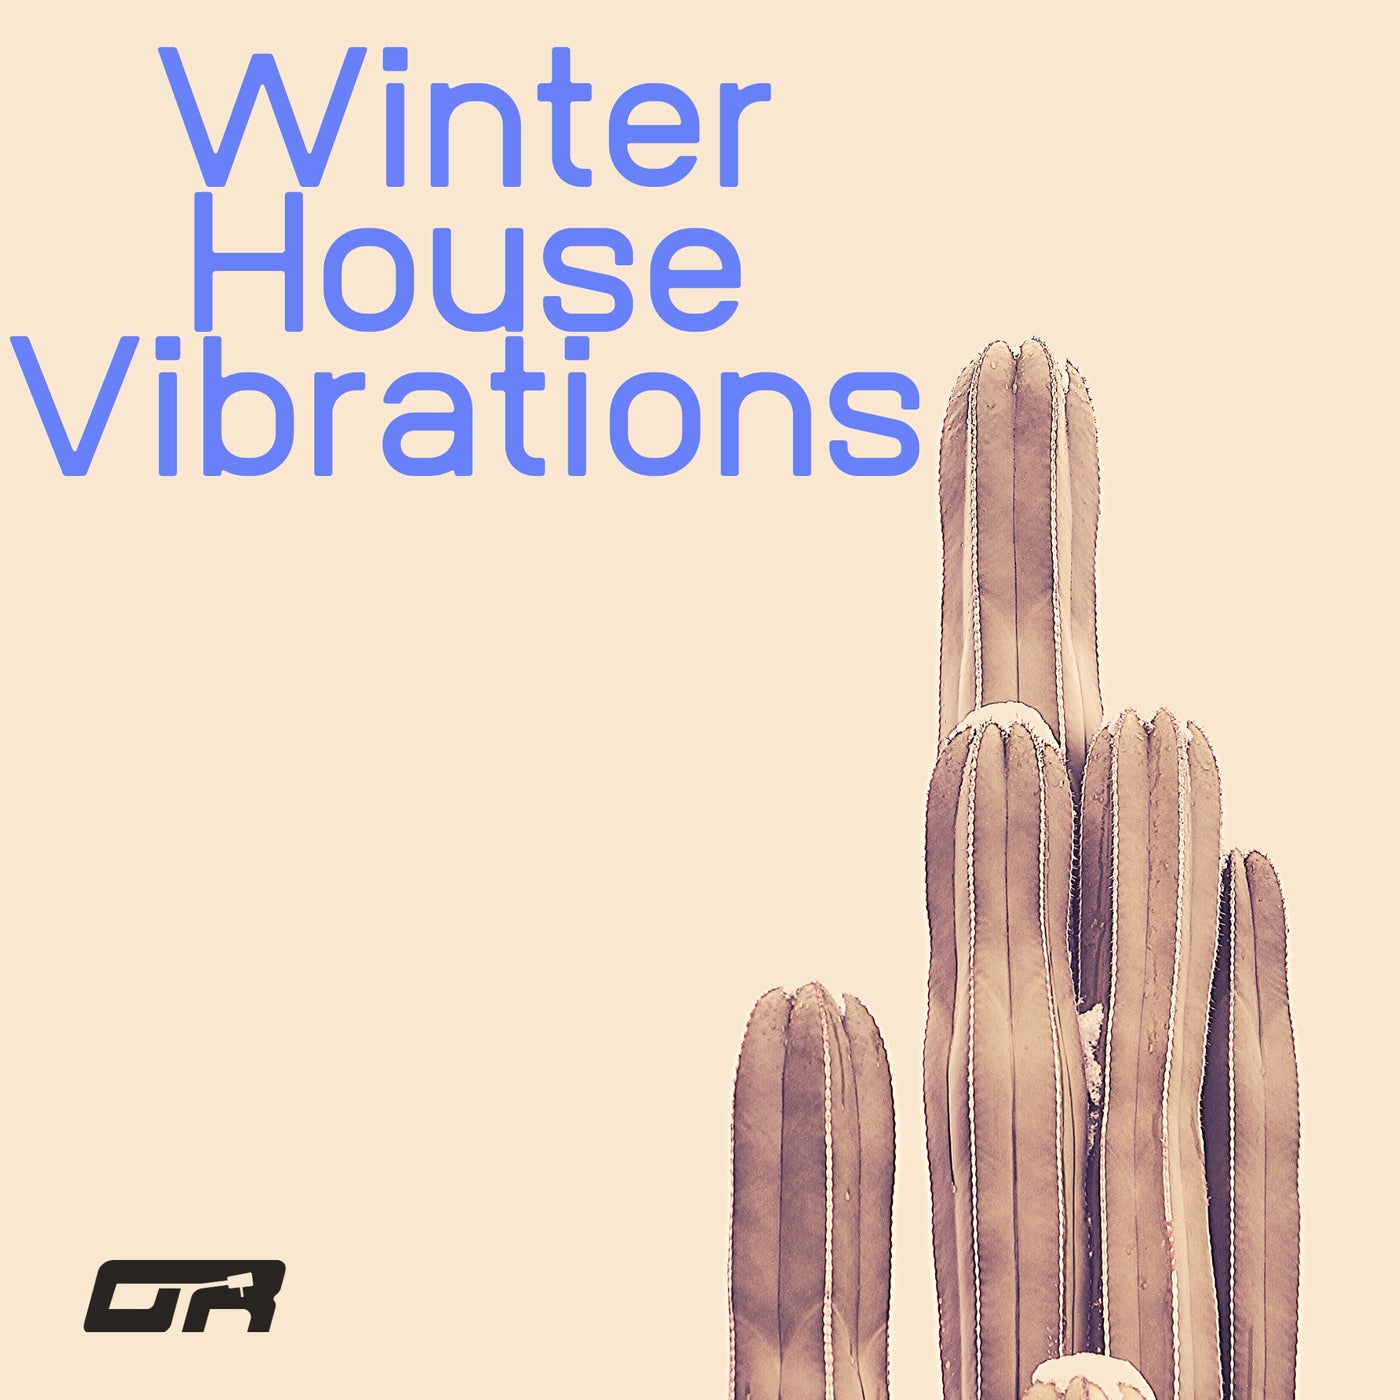 Winter House Vibrations